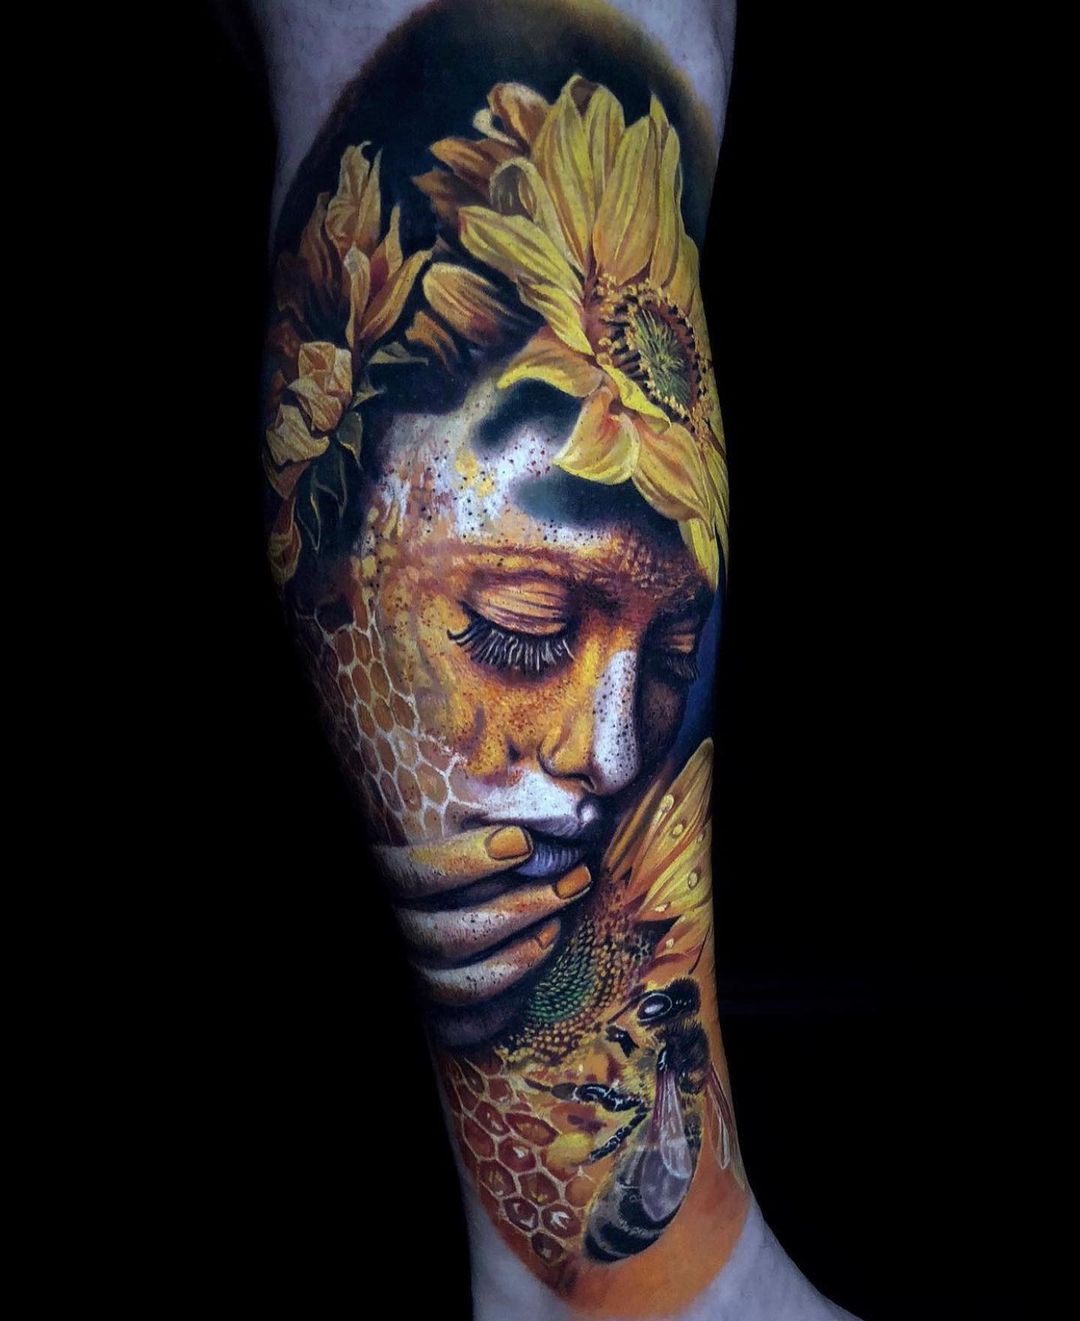 Sunflower Tattoo - Ideas To Spark Your Floral Tattoo - Tattoo Stylist